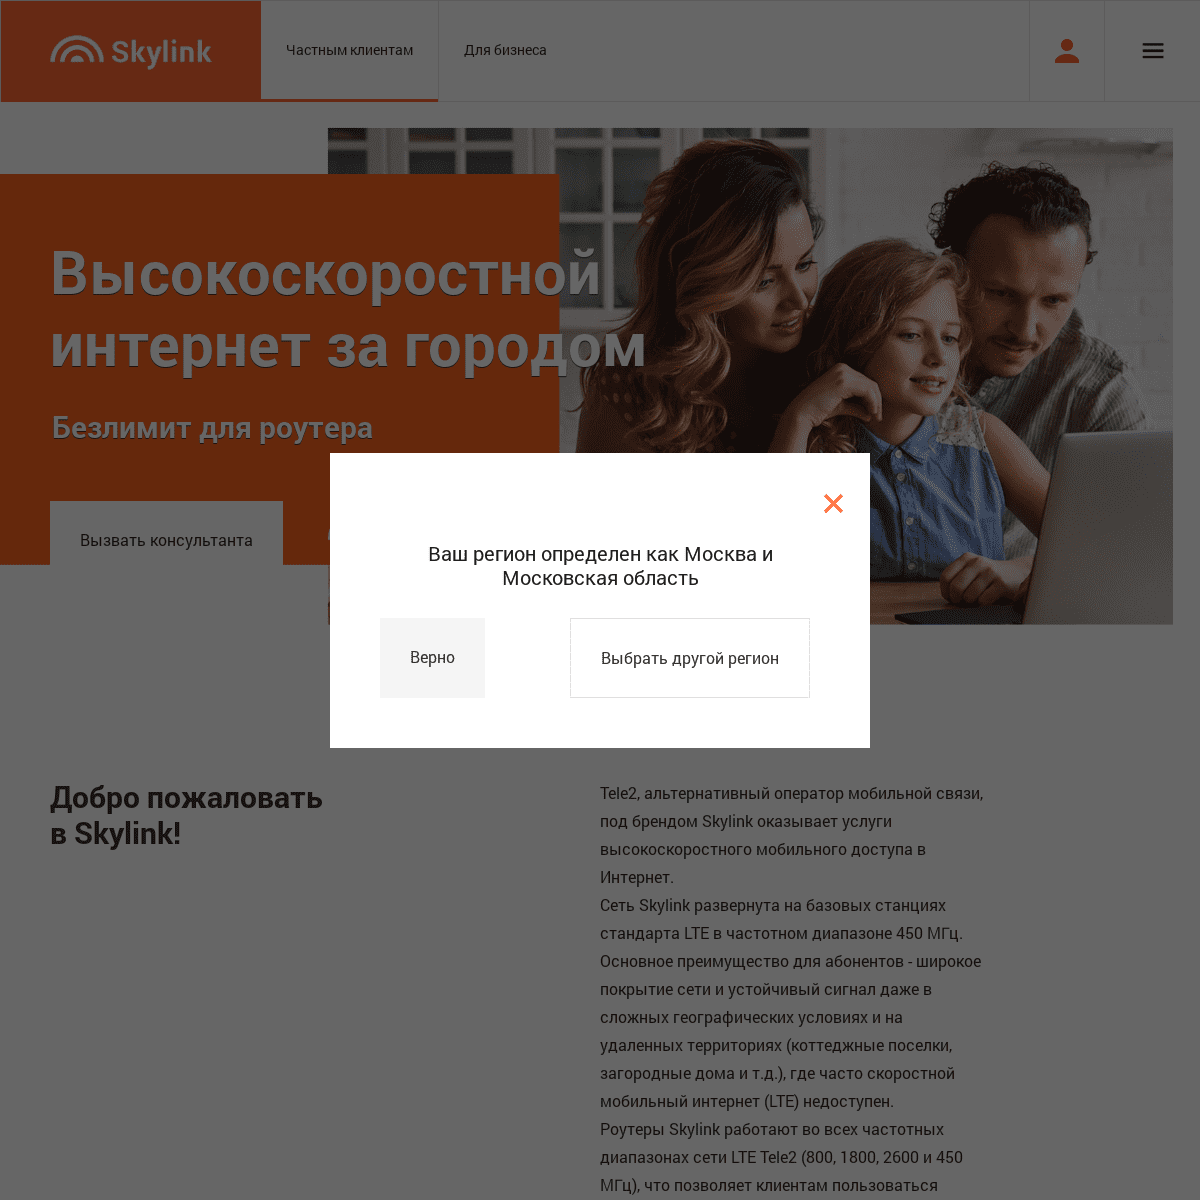 A complete backup of skylink.ru